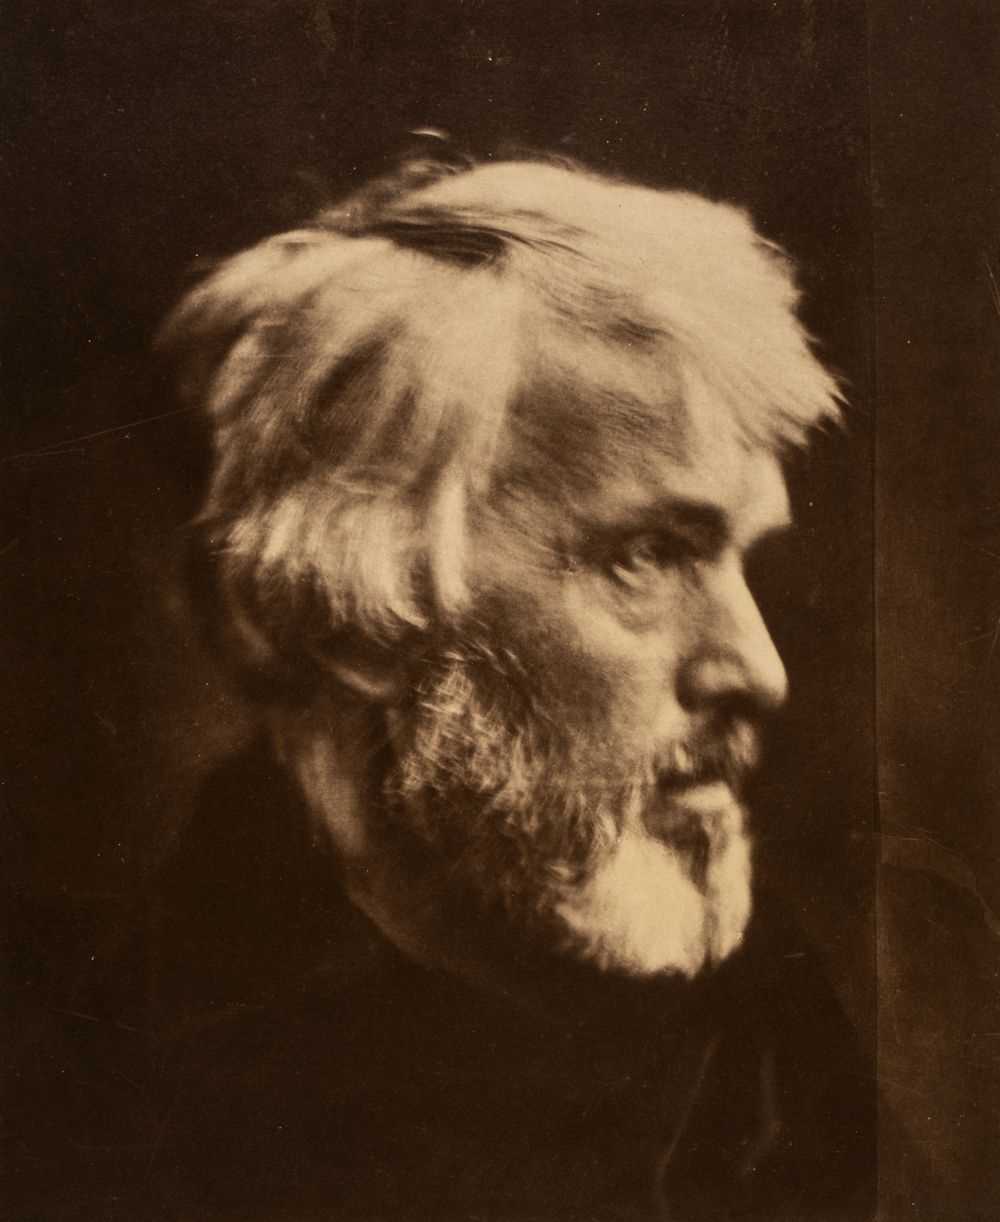 Lot 19 - Cameron (Julia Margaret, 1815-1879). Thomas Carlyle, 1867, printed 1875, carbon print